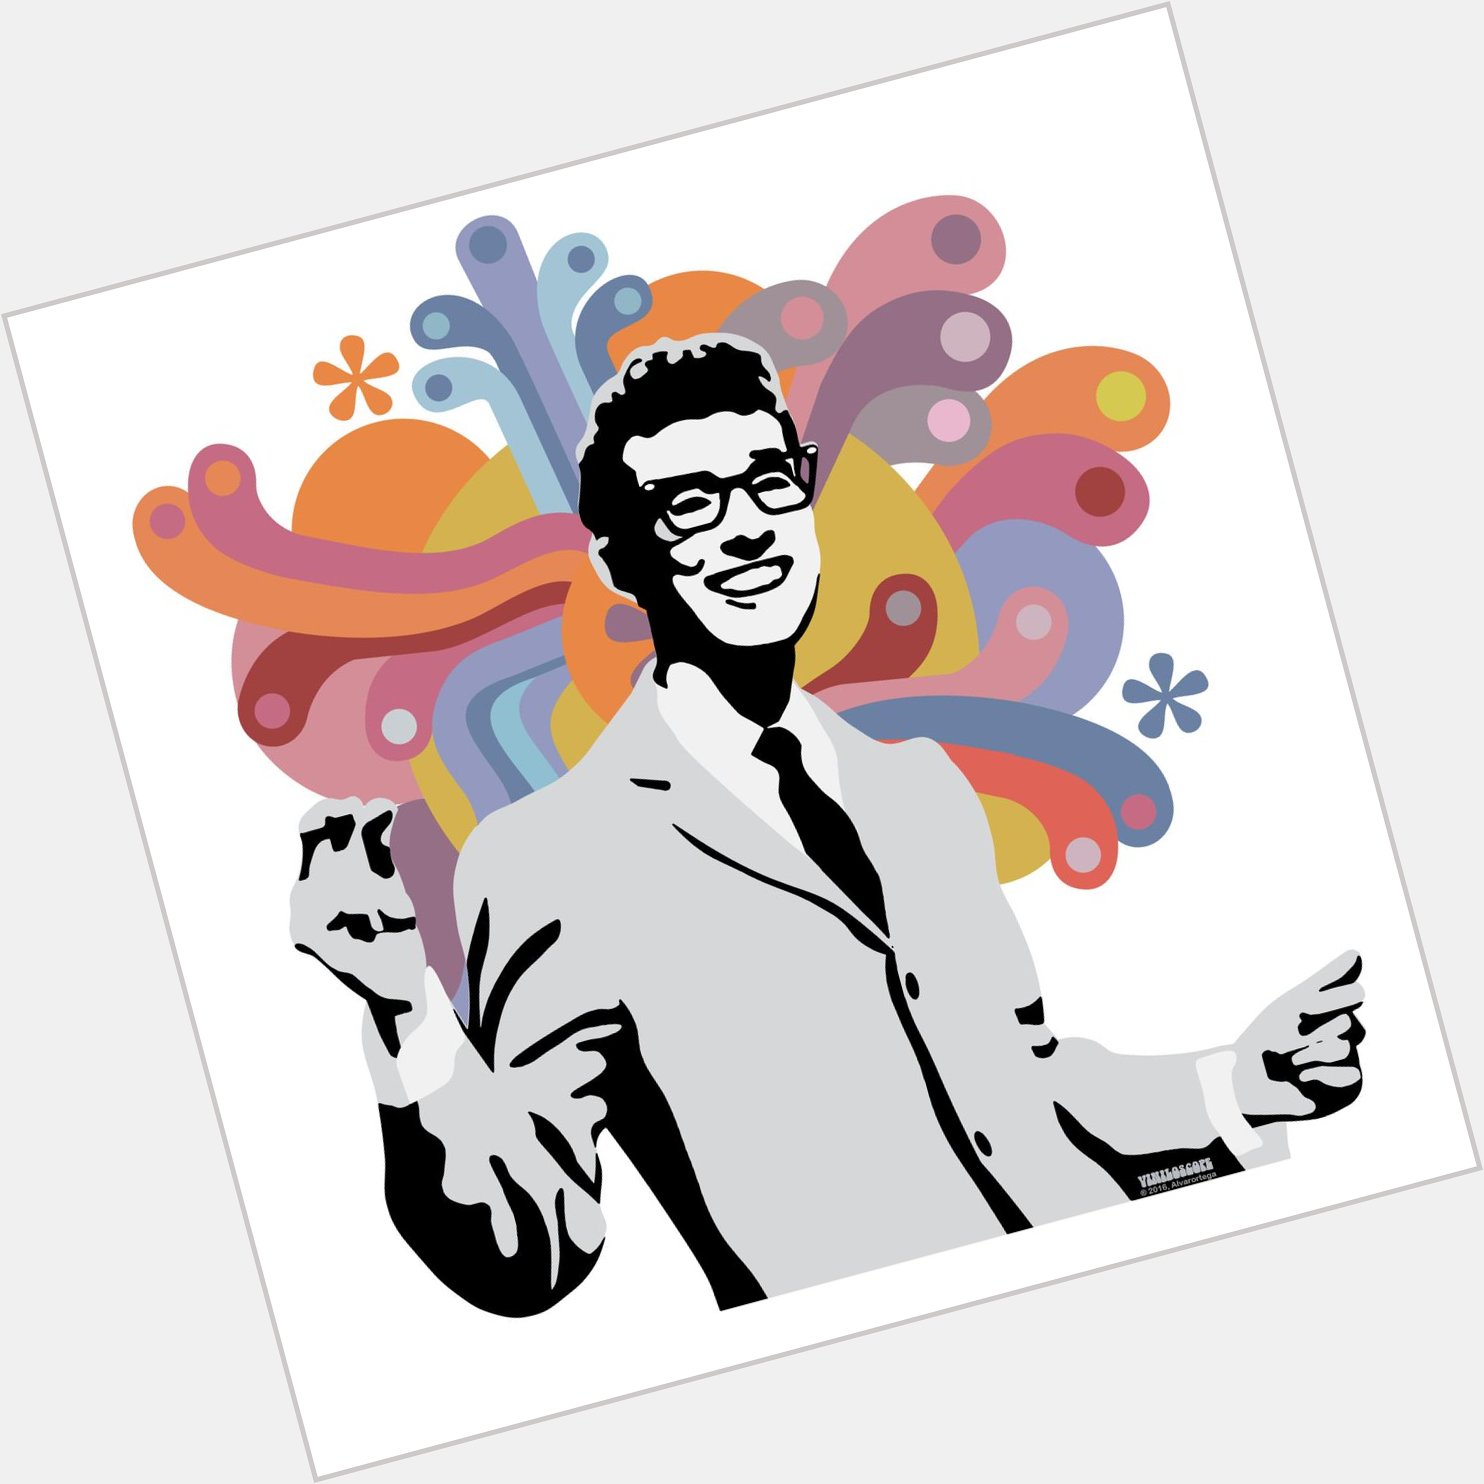 We re still raving on to that crazy feeling! Happy birthday, Buddy Holly!  : 